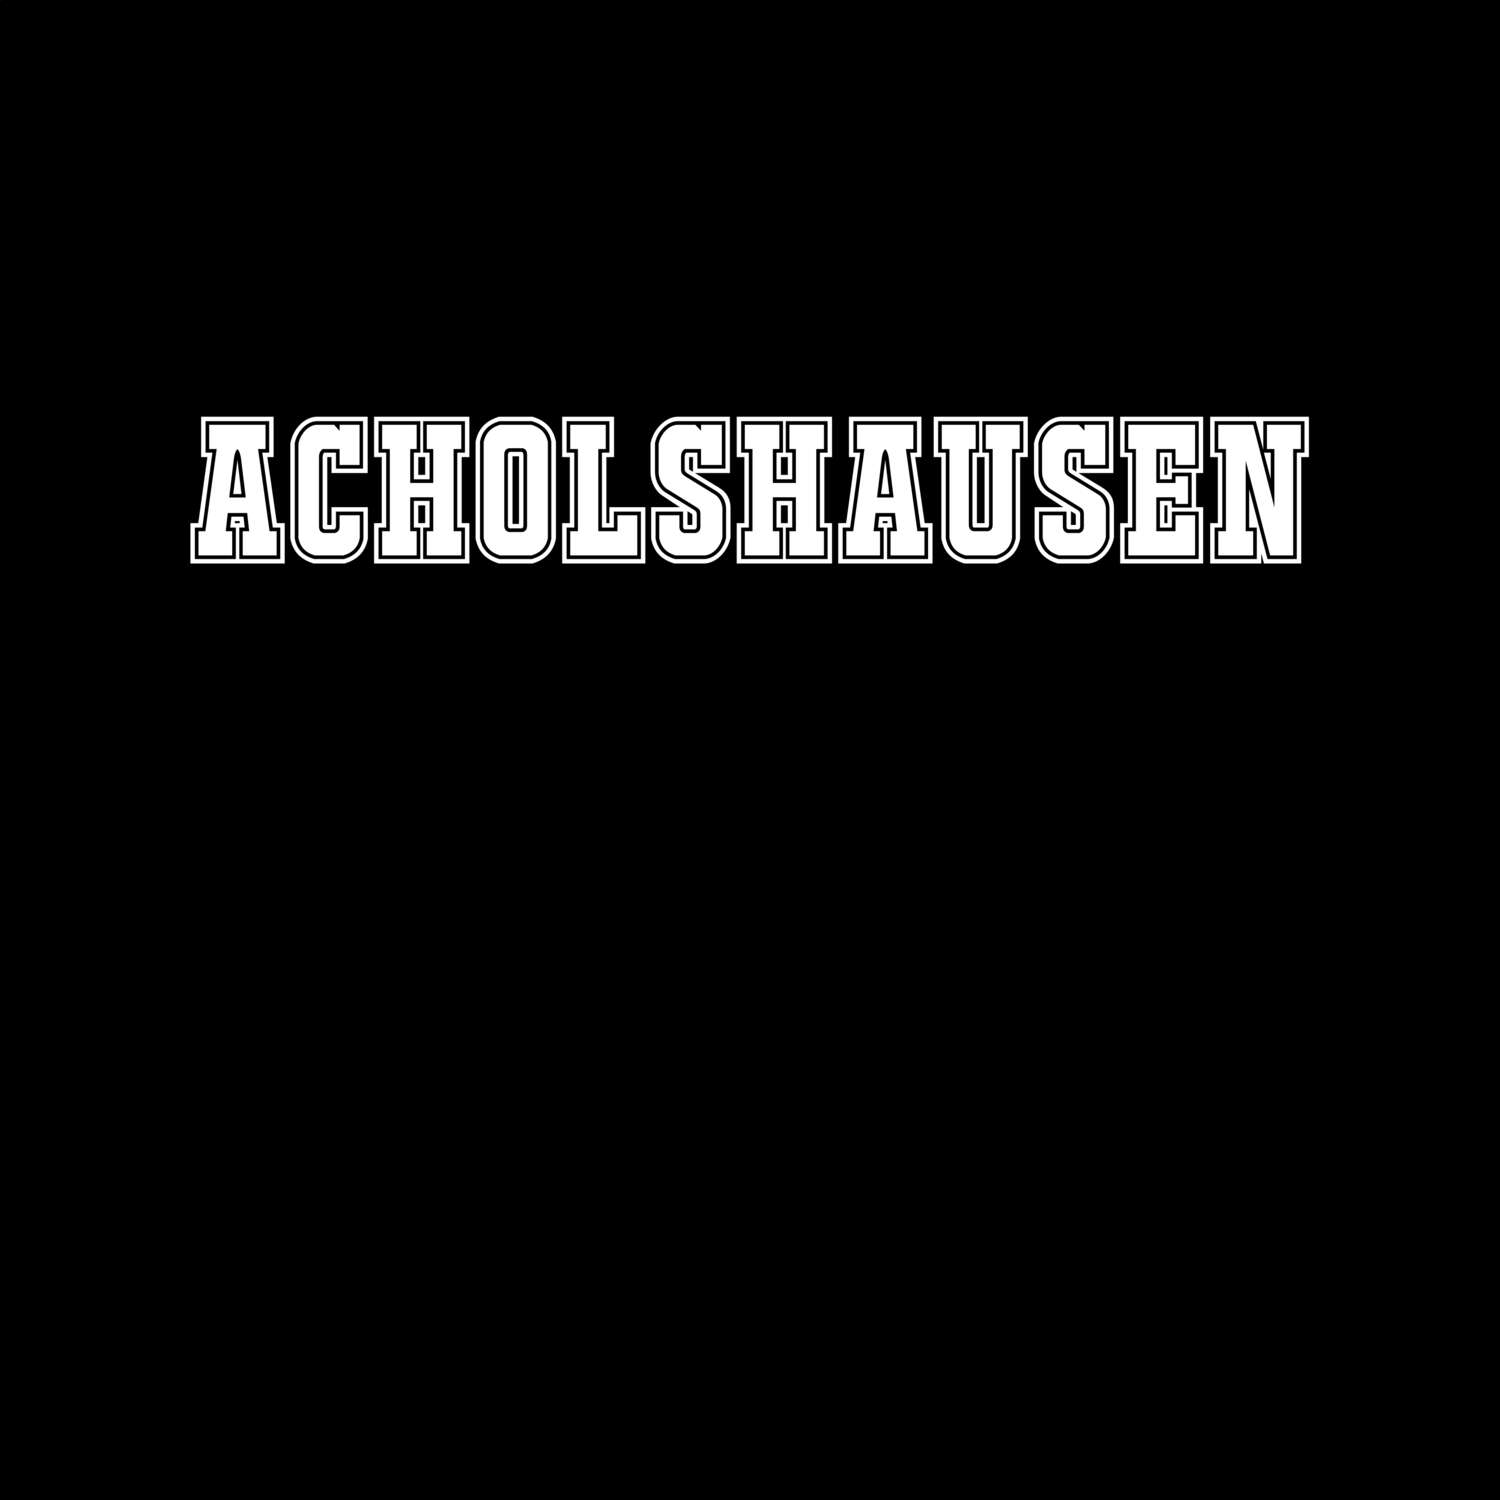 Acholshausen T-Shirt »Classic«